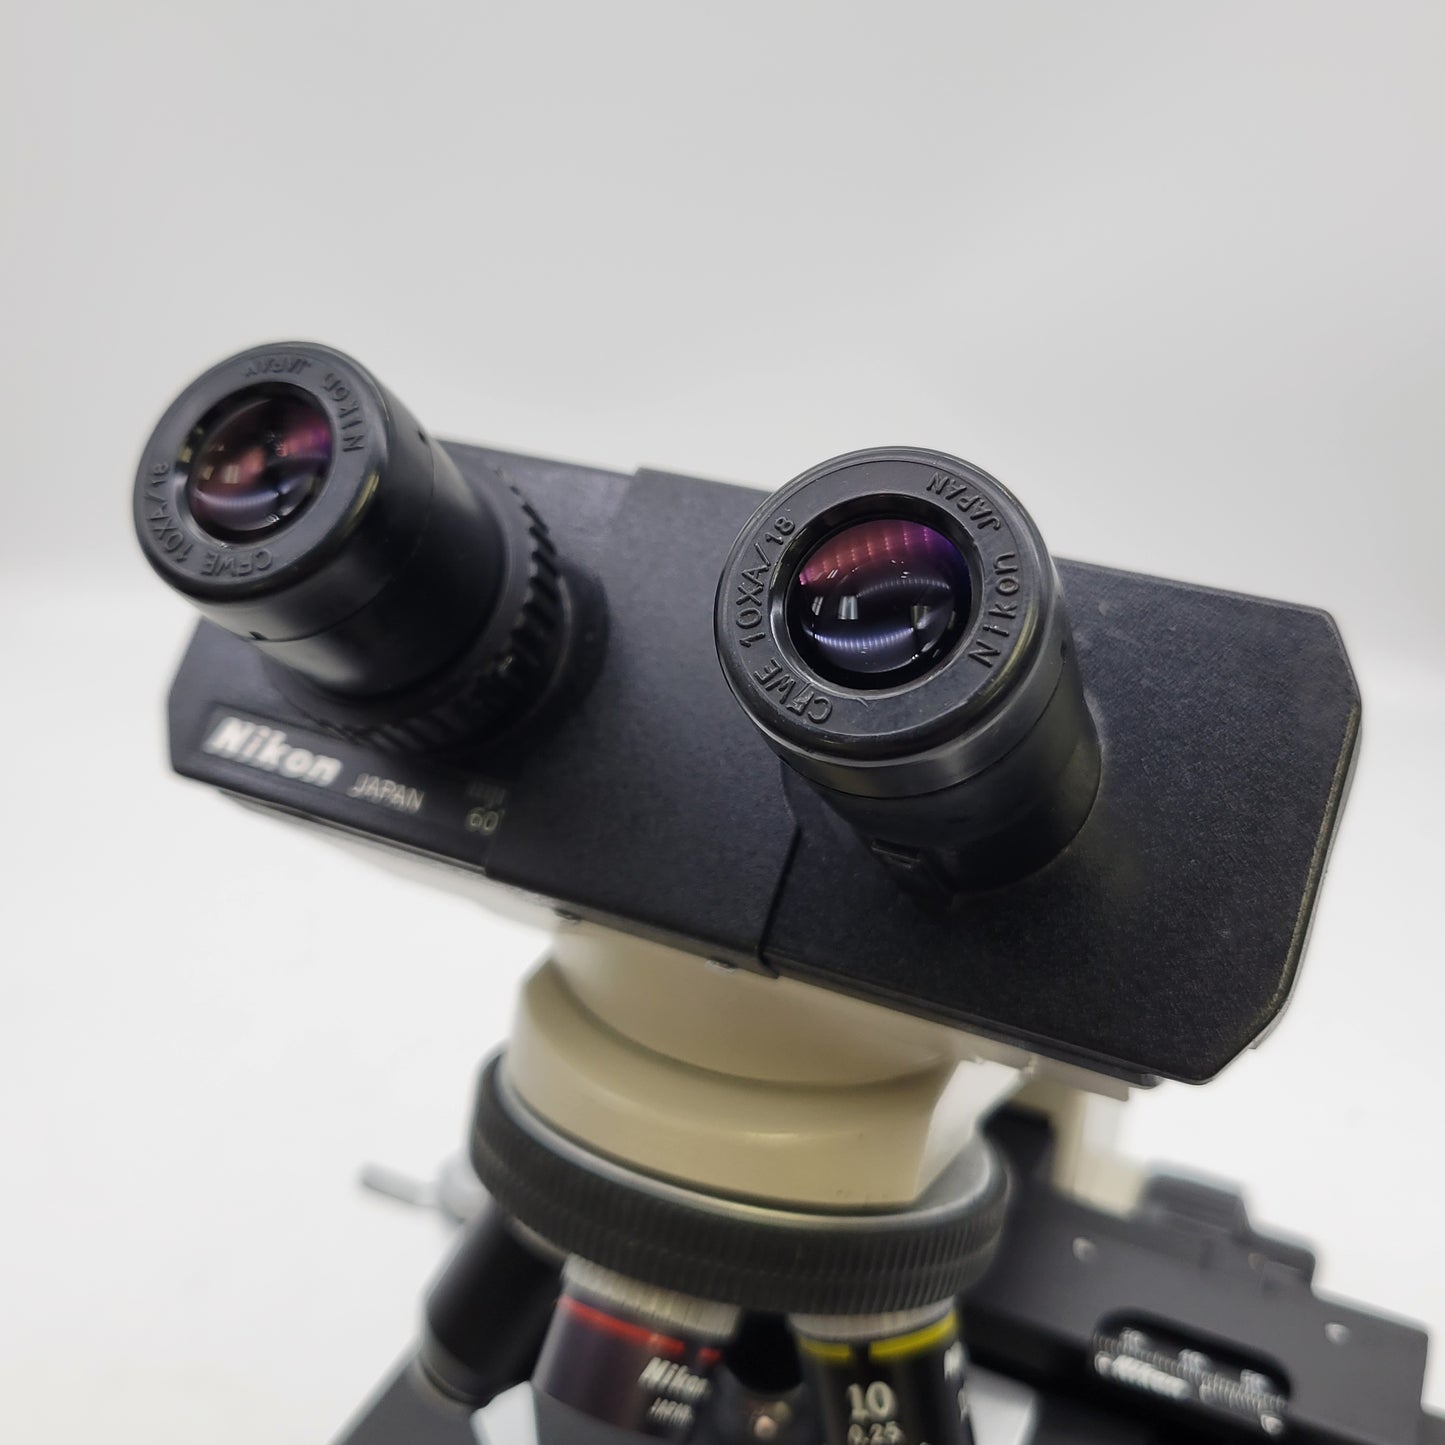 Nikon Microscope Alphaphot 2 with 4x, 10x, 40x, 100x Oil Objectives - microscopemarketplace